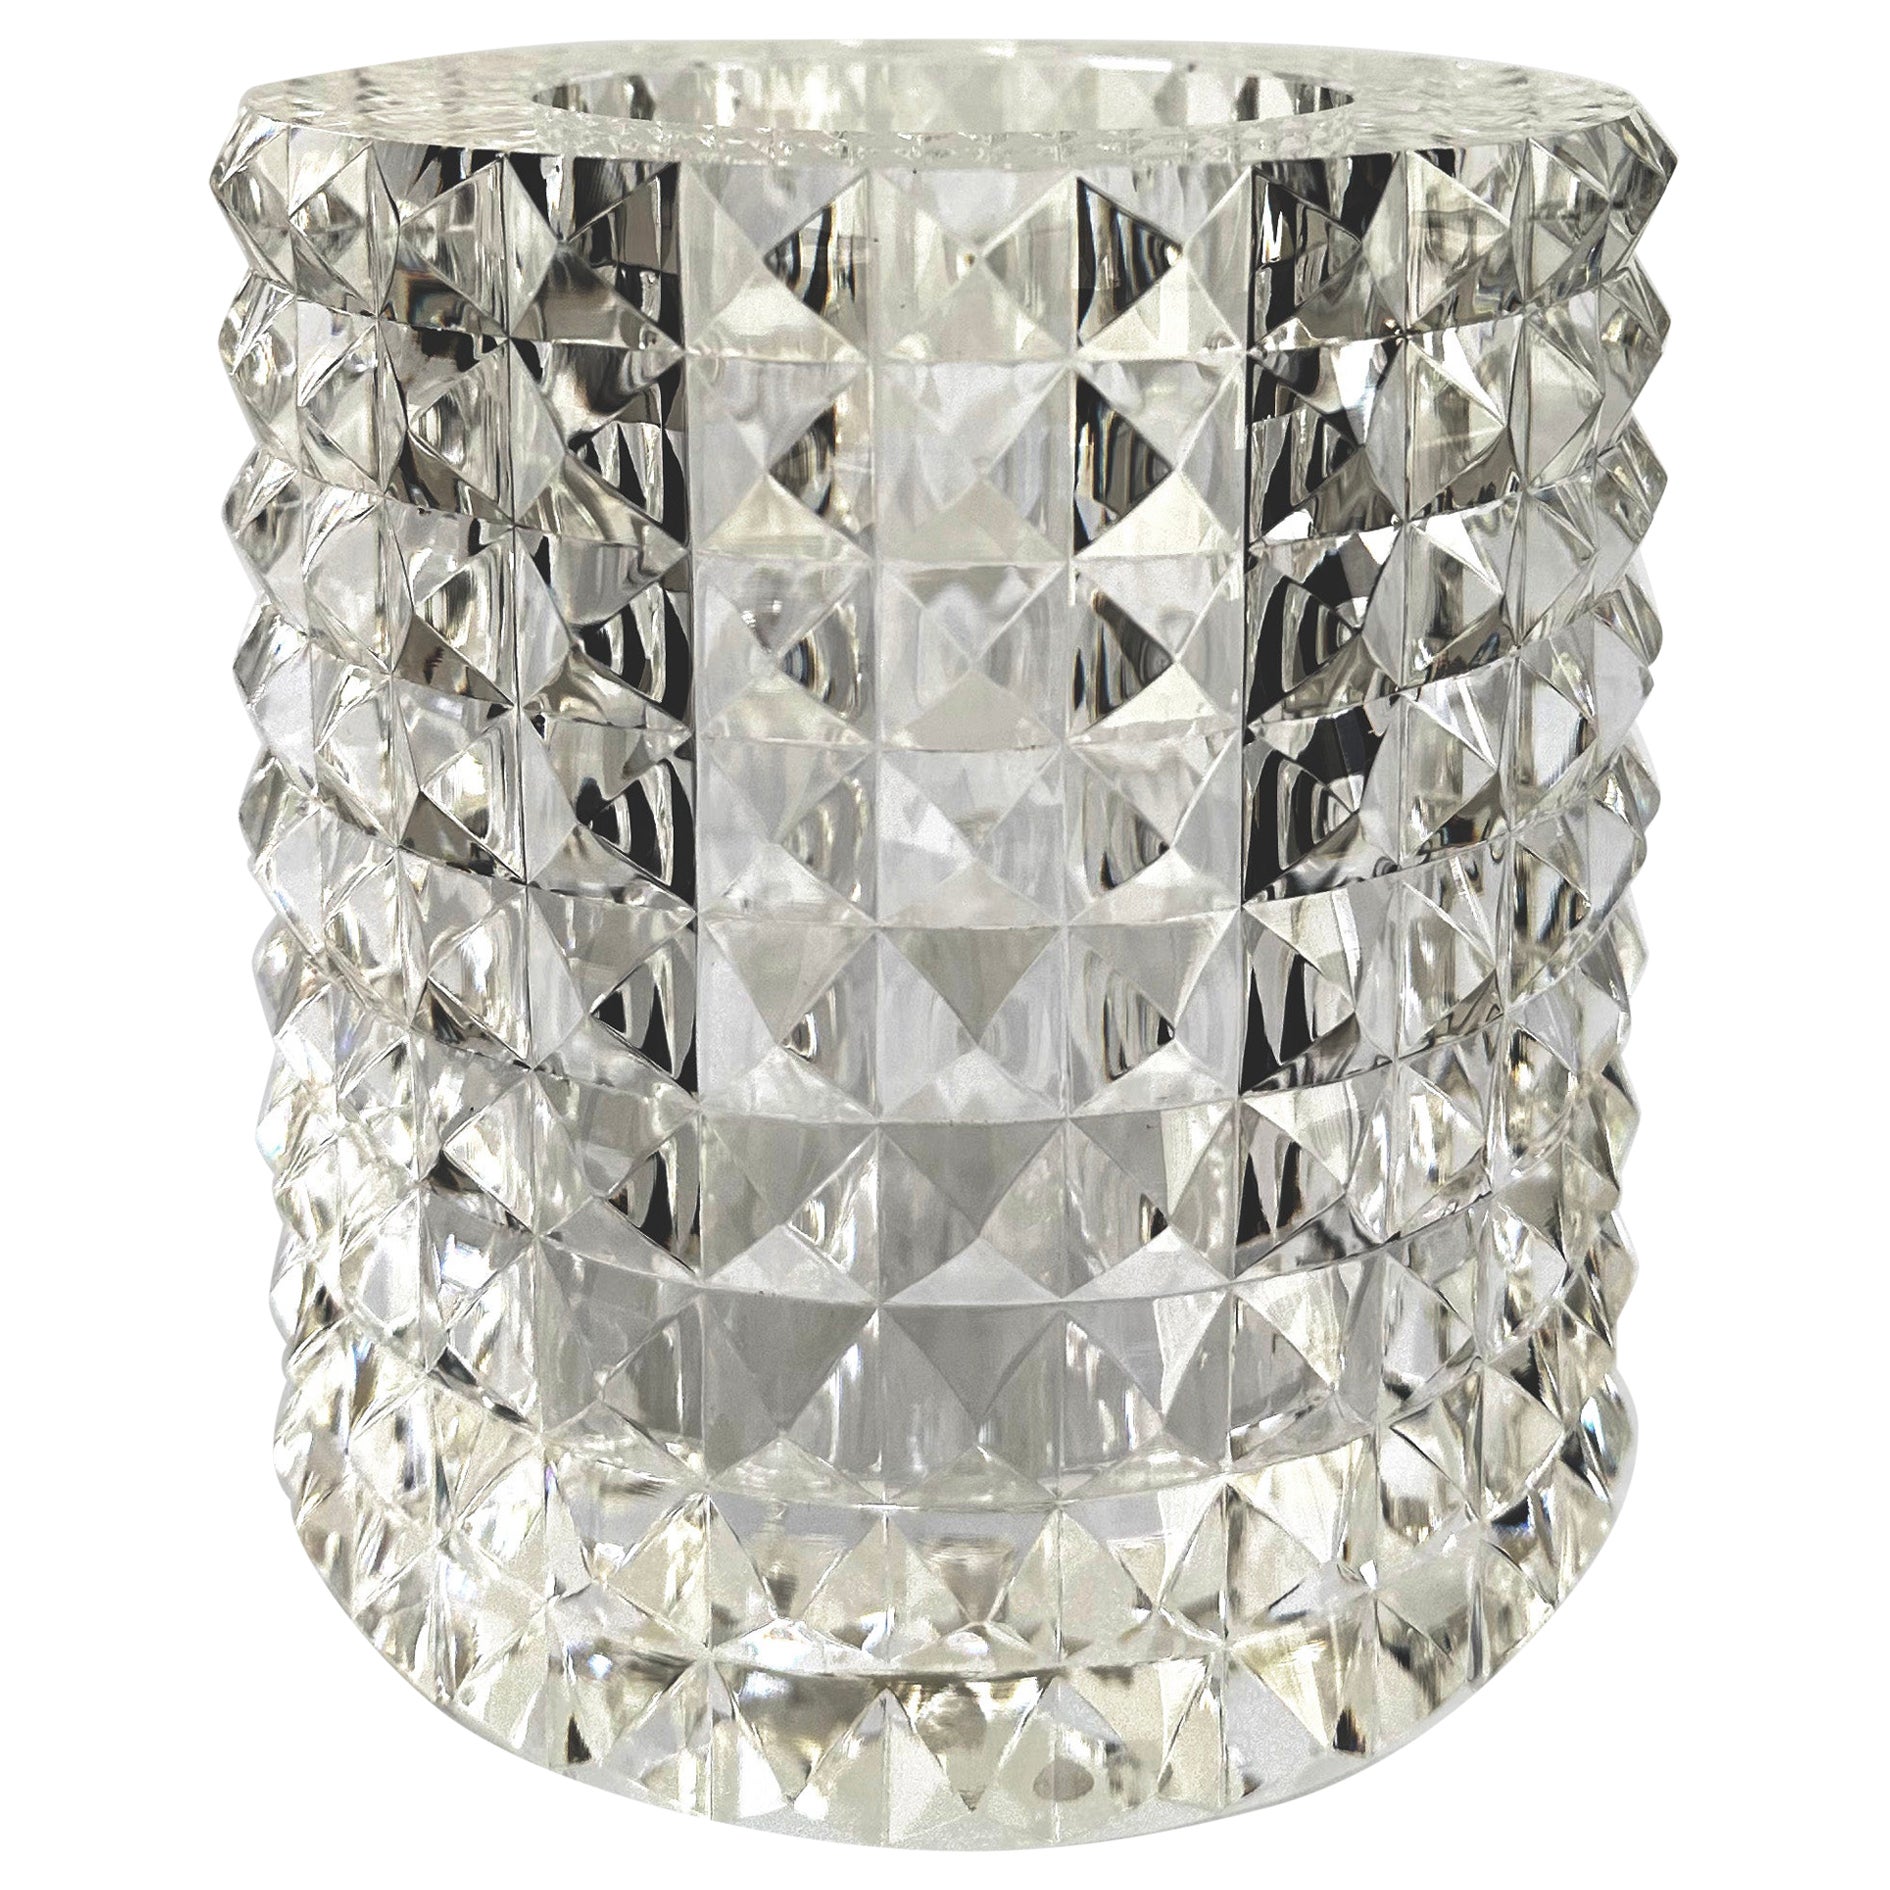  Veritas Home - Grand vase pyramidal contemporain en verre optique transparent 